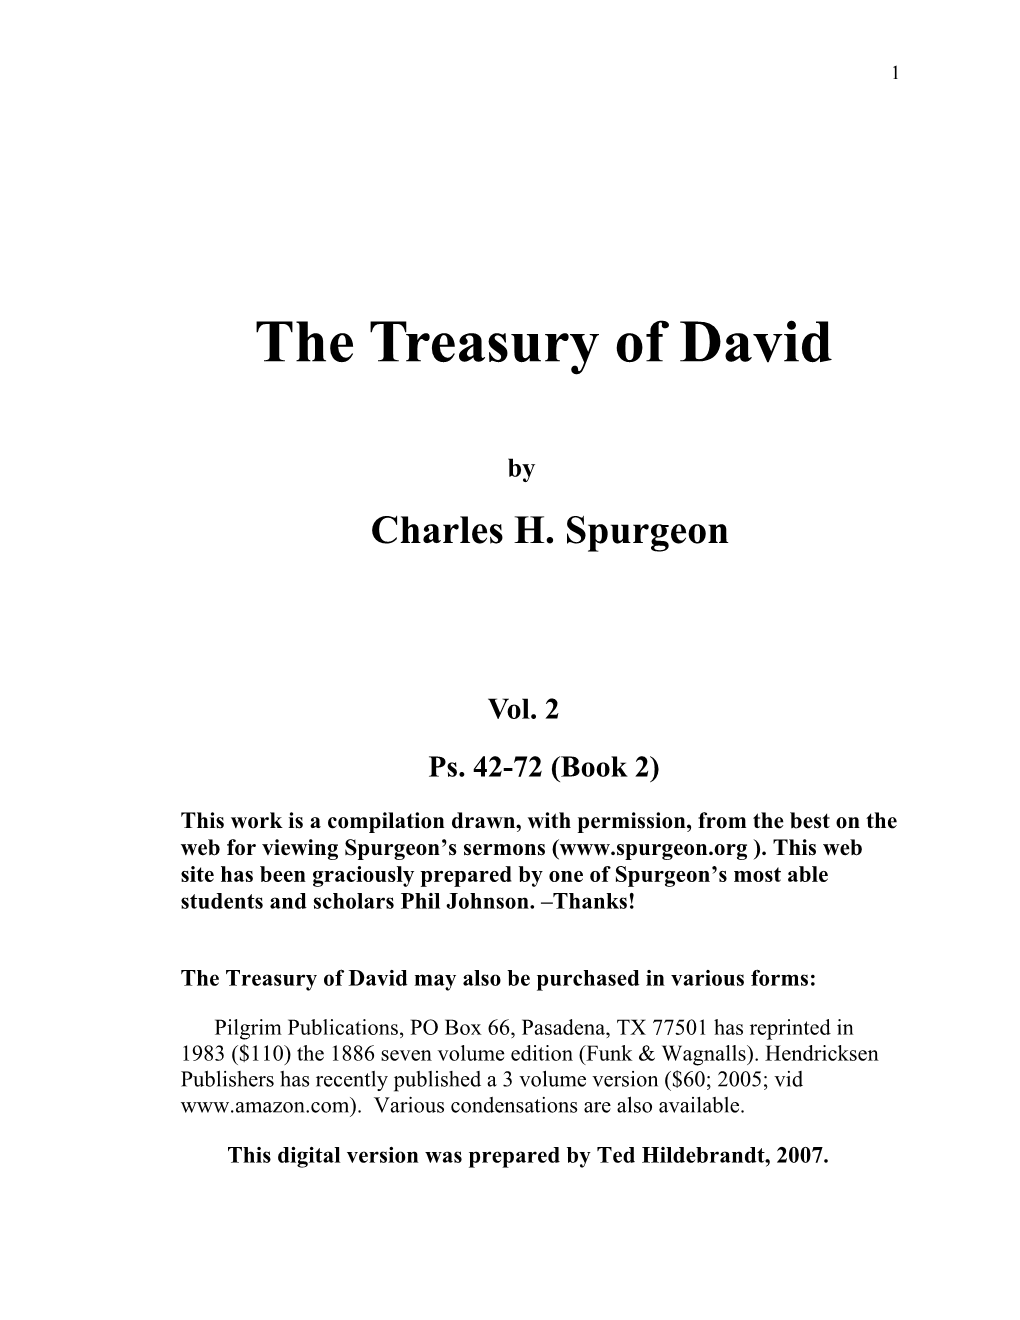 Treasury of David (Vol. 2 Ps. 42-72)